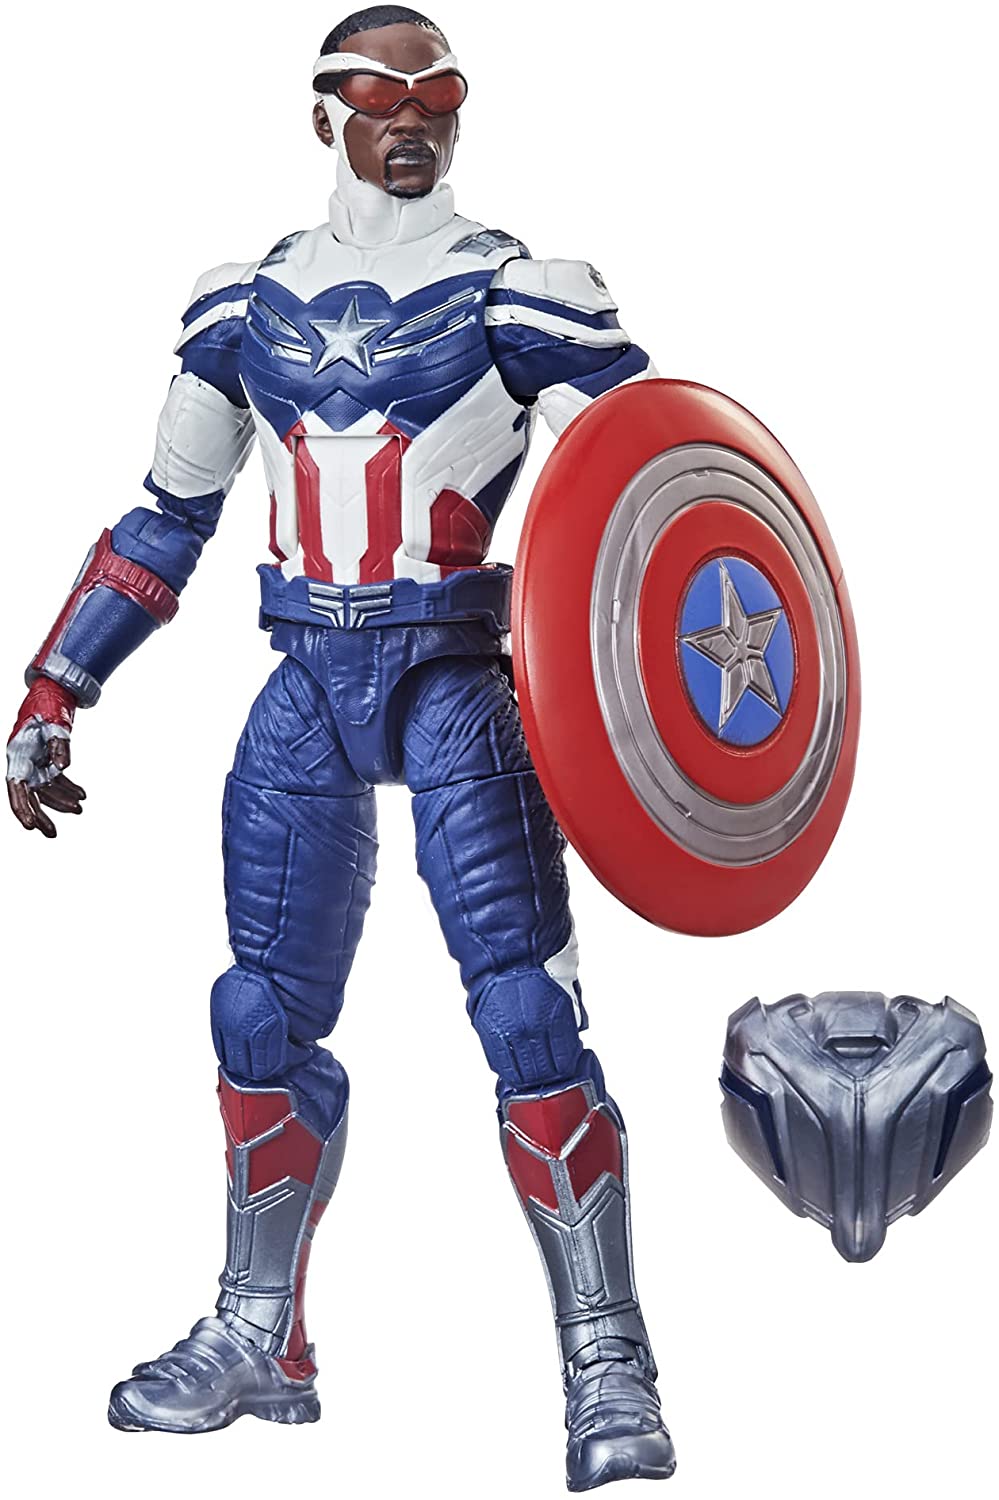 Avengers Hasbro Marvel Legends Series 6-inch Action Figure Toy Captain America: Sam Wilson Premium Design and 2 Accessories